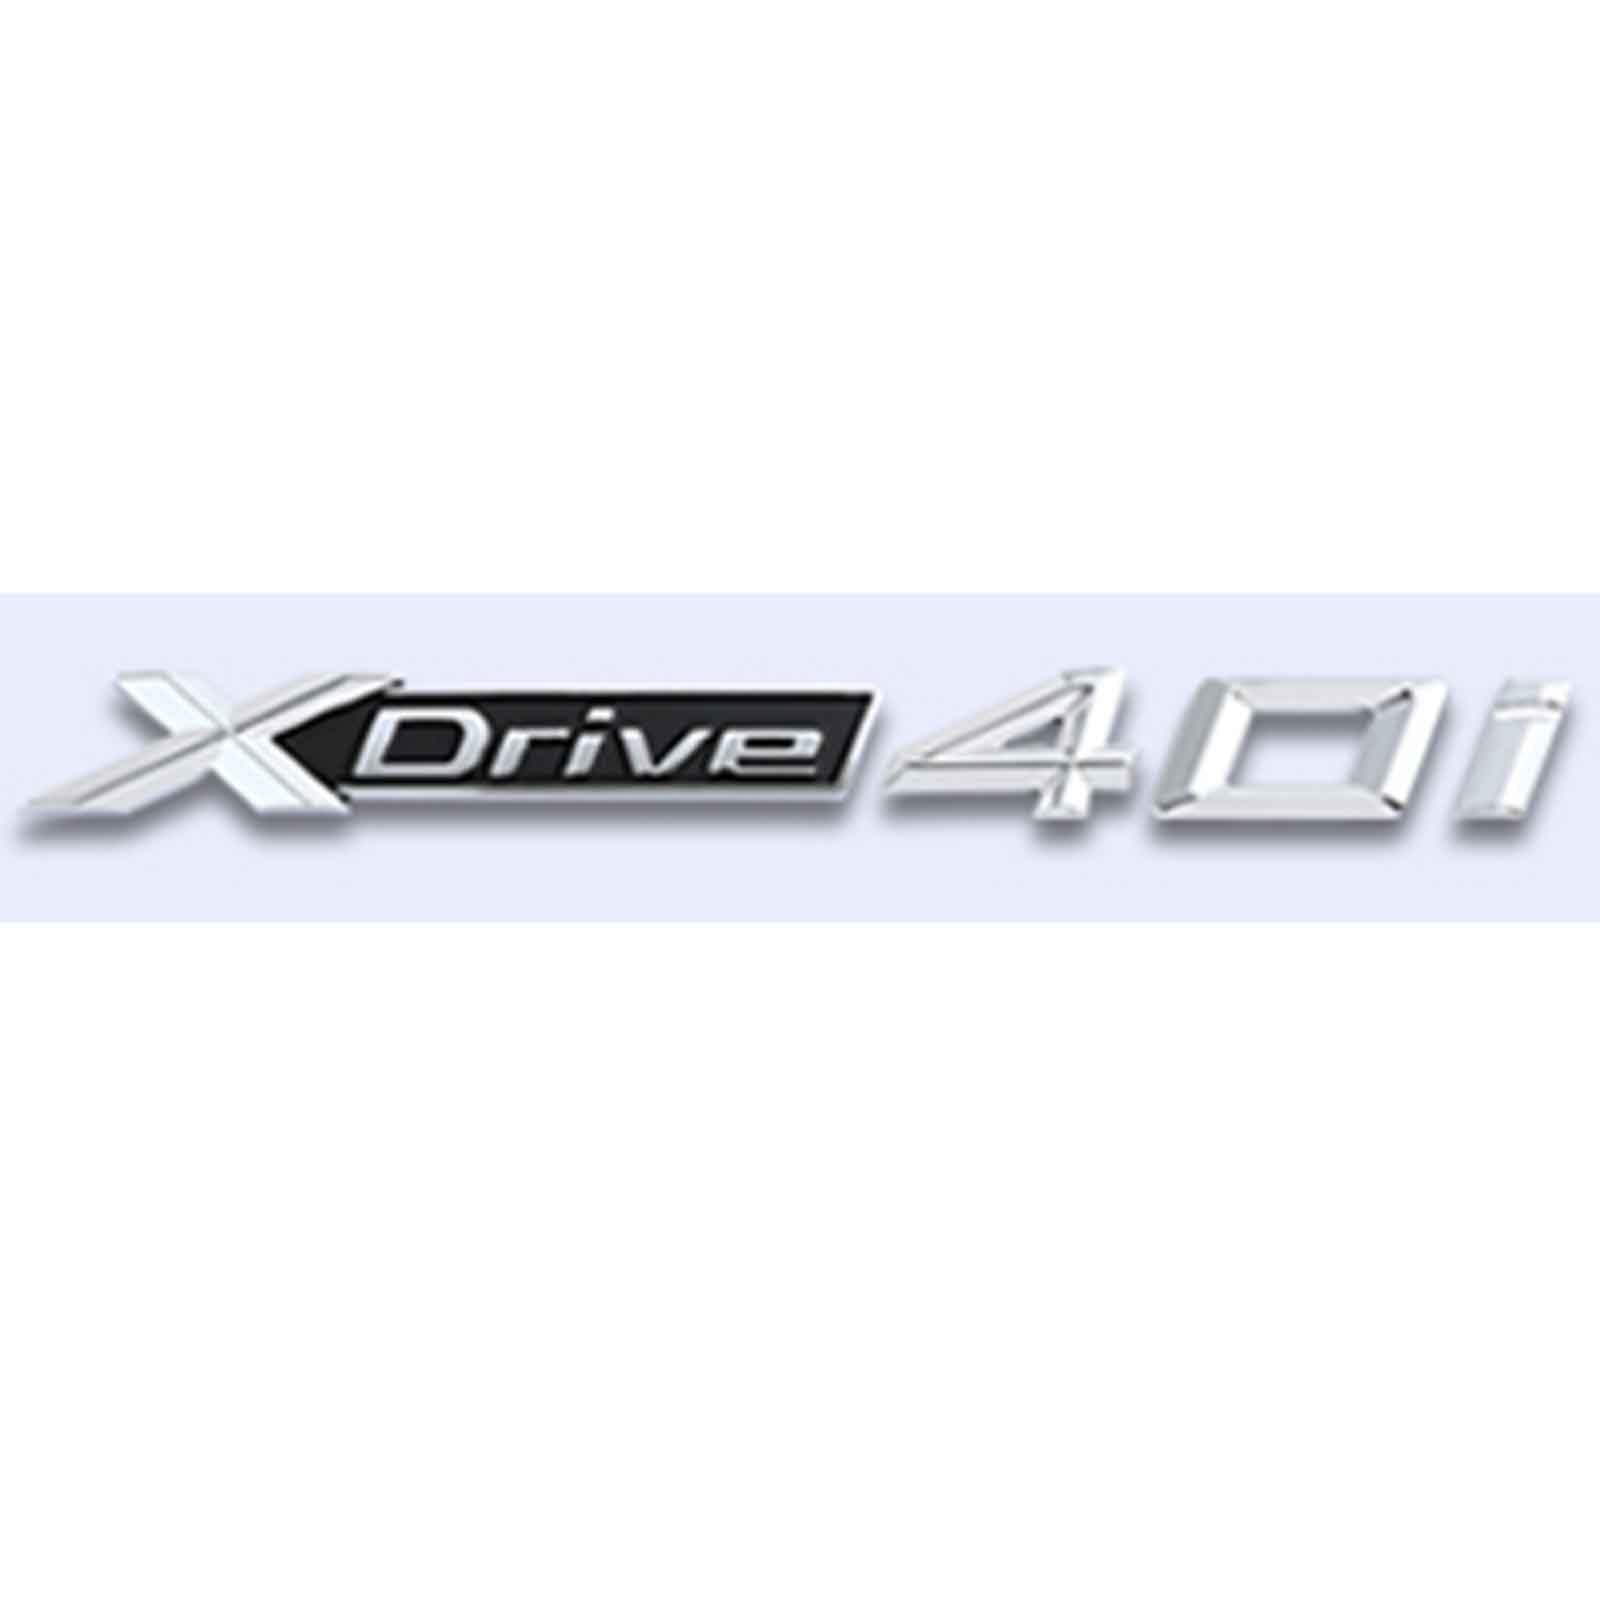 Auto Metall Emblem Badge für BMW X2 X3 X4 X5 X6 X7 E83 F25 F26 E70 M Performance, Selbstklebend Karosserie Aufkleber Autoaufkleber Auto Dekoration Zubehör,Silver- XDrive40i von DJUNA